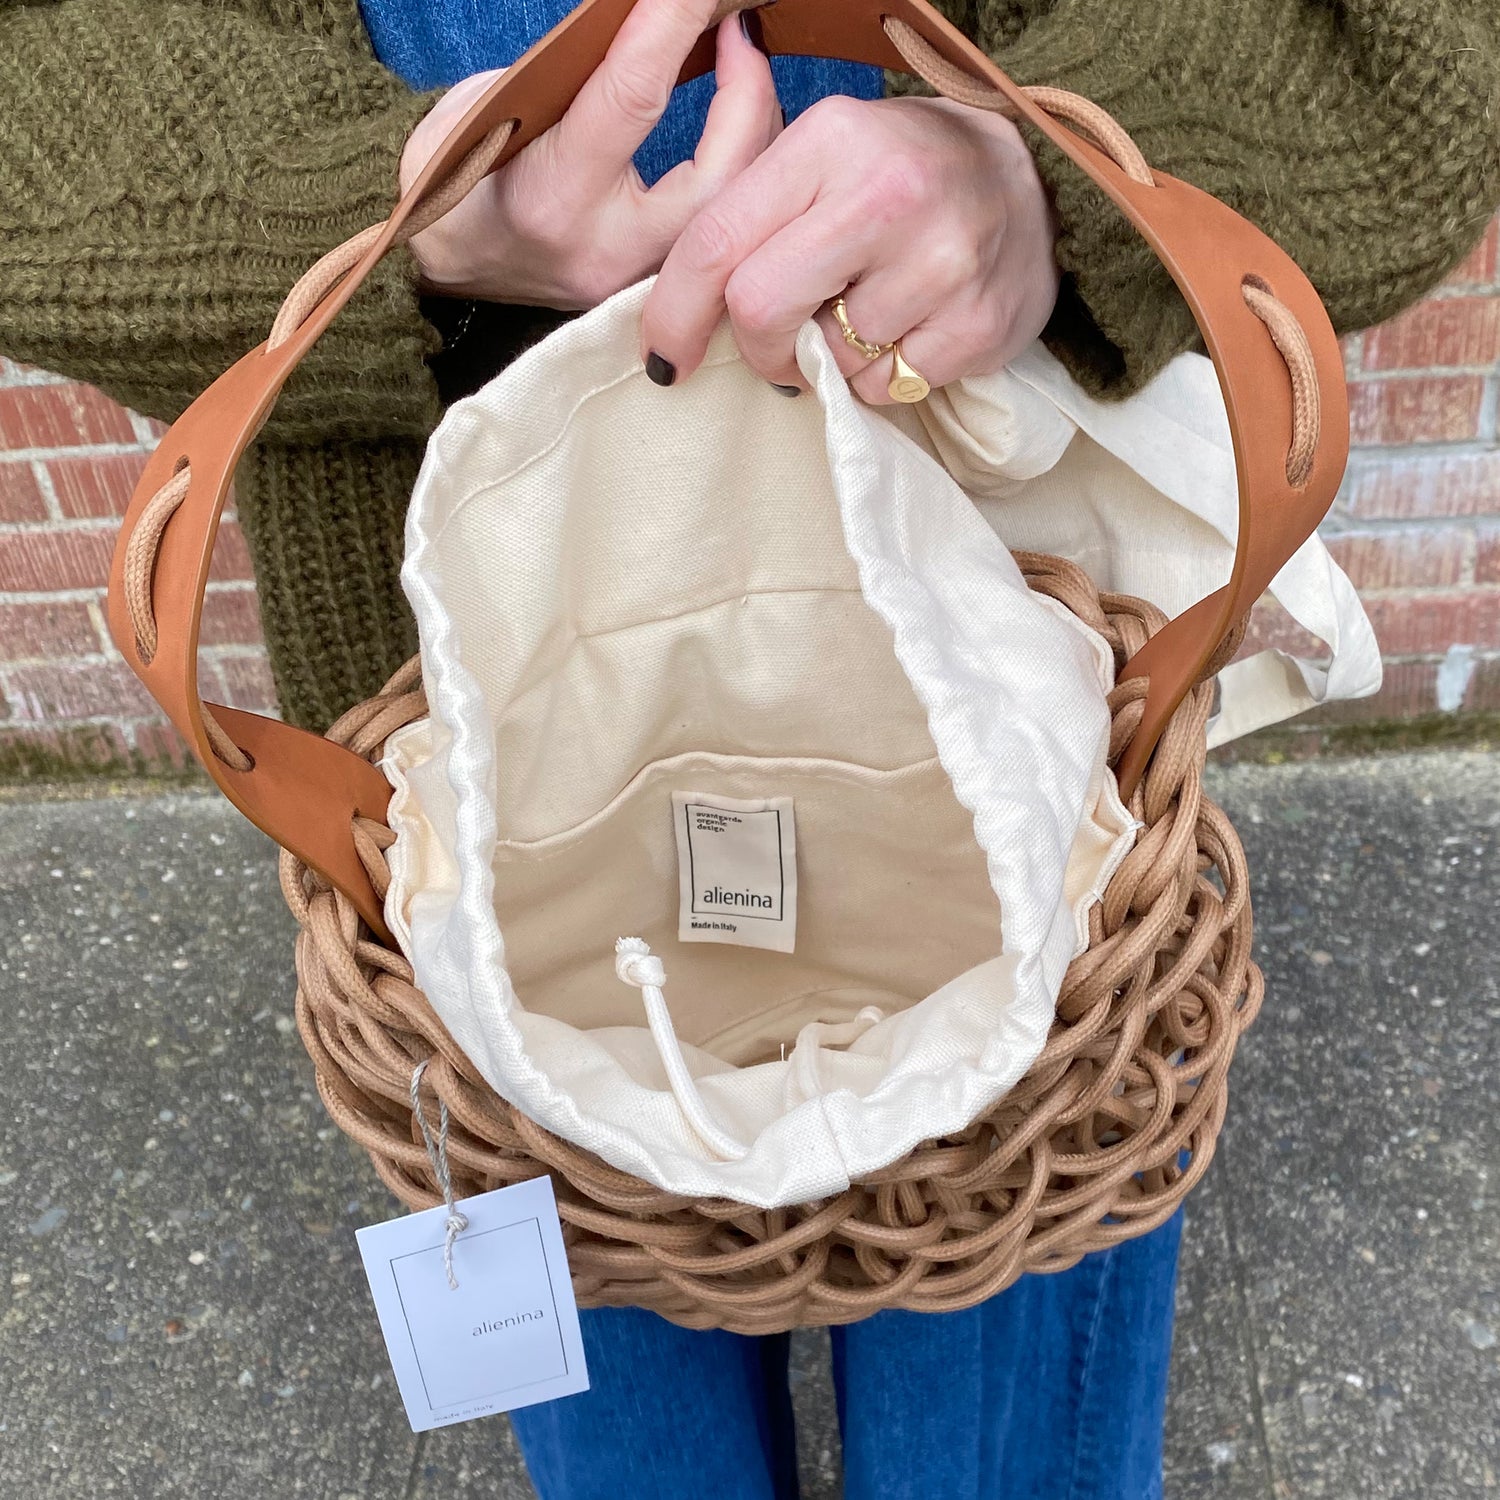 Italian handbag. Small shoulder bag make of woven cotton rope with leather shoulder strap. tan color